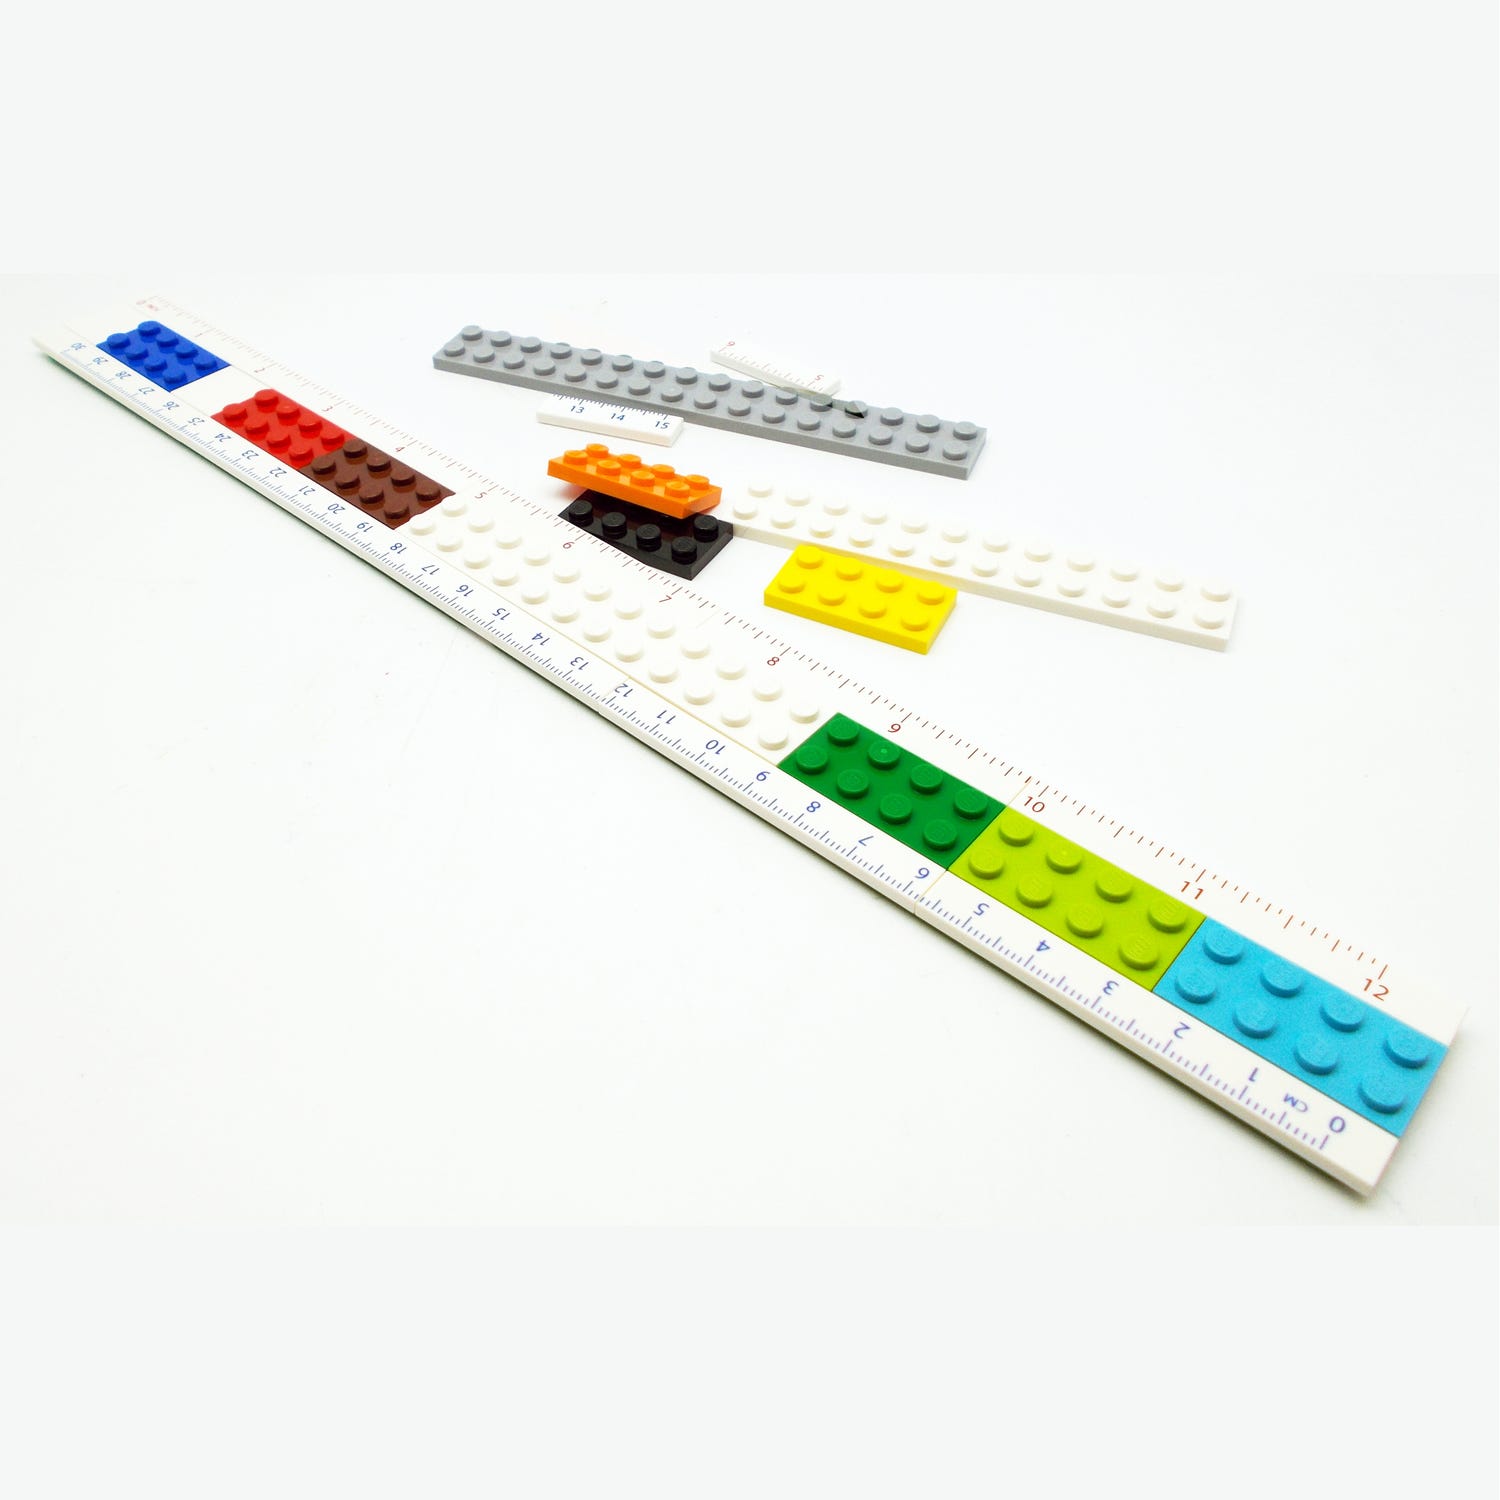 LEGO BUILDABLE RULER 15-30 CM WITH MINIFIGURE - alternative